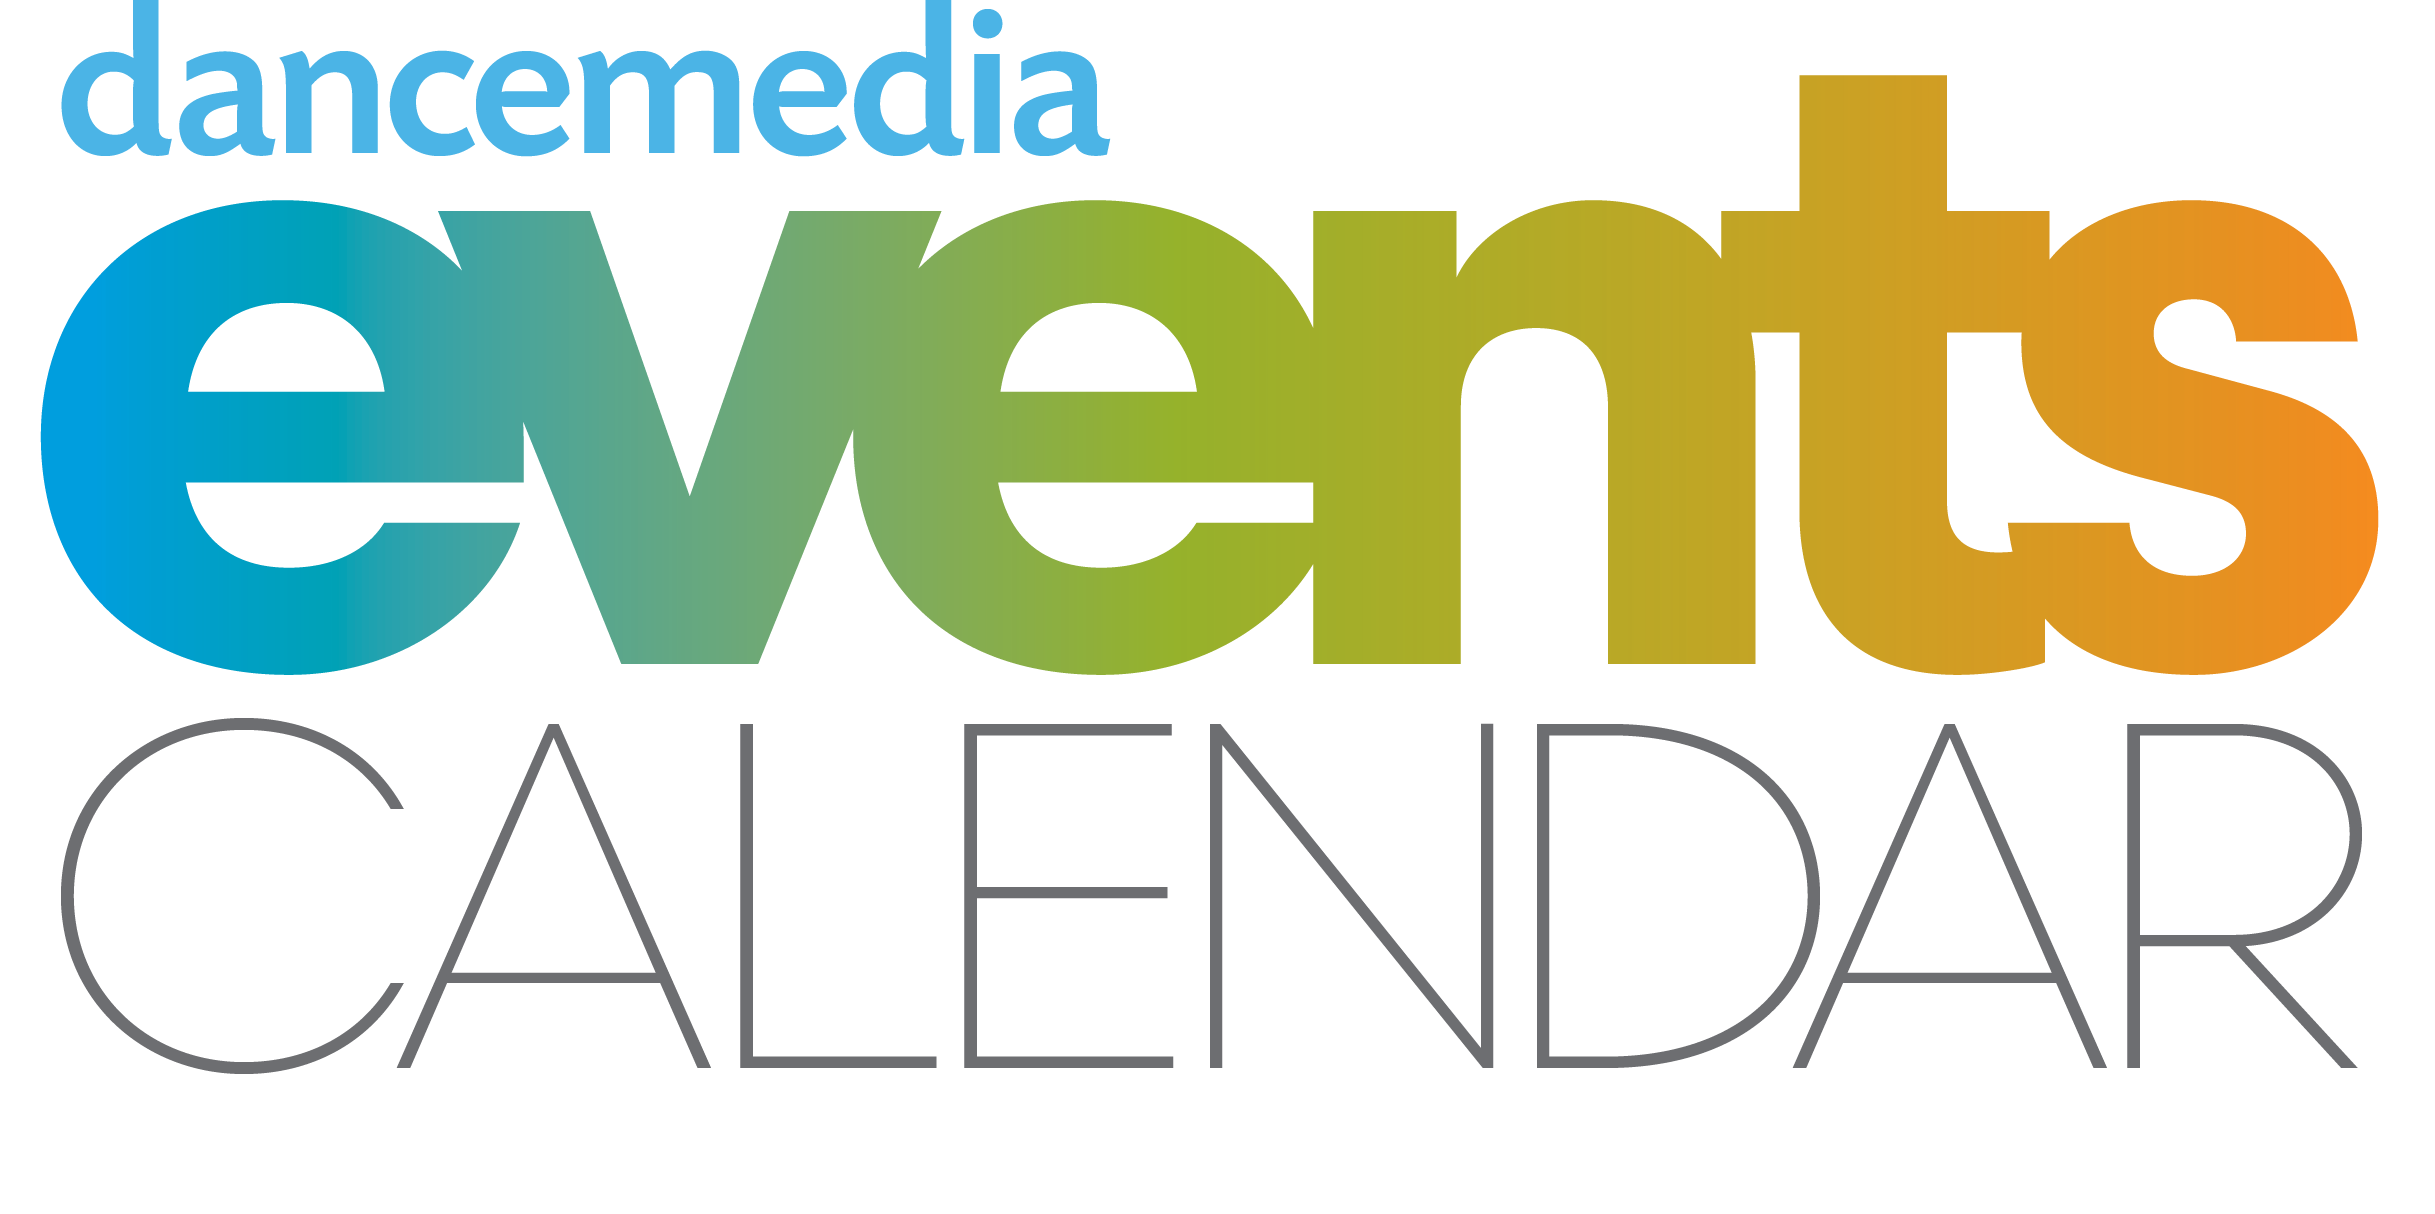 Dance Media Events Calendar